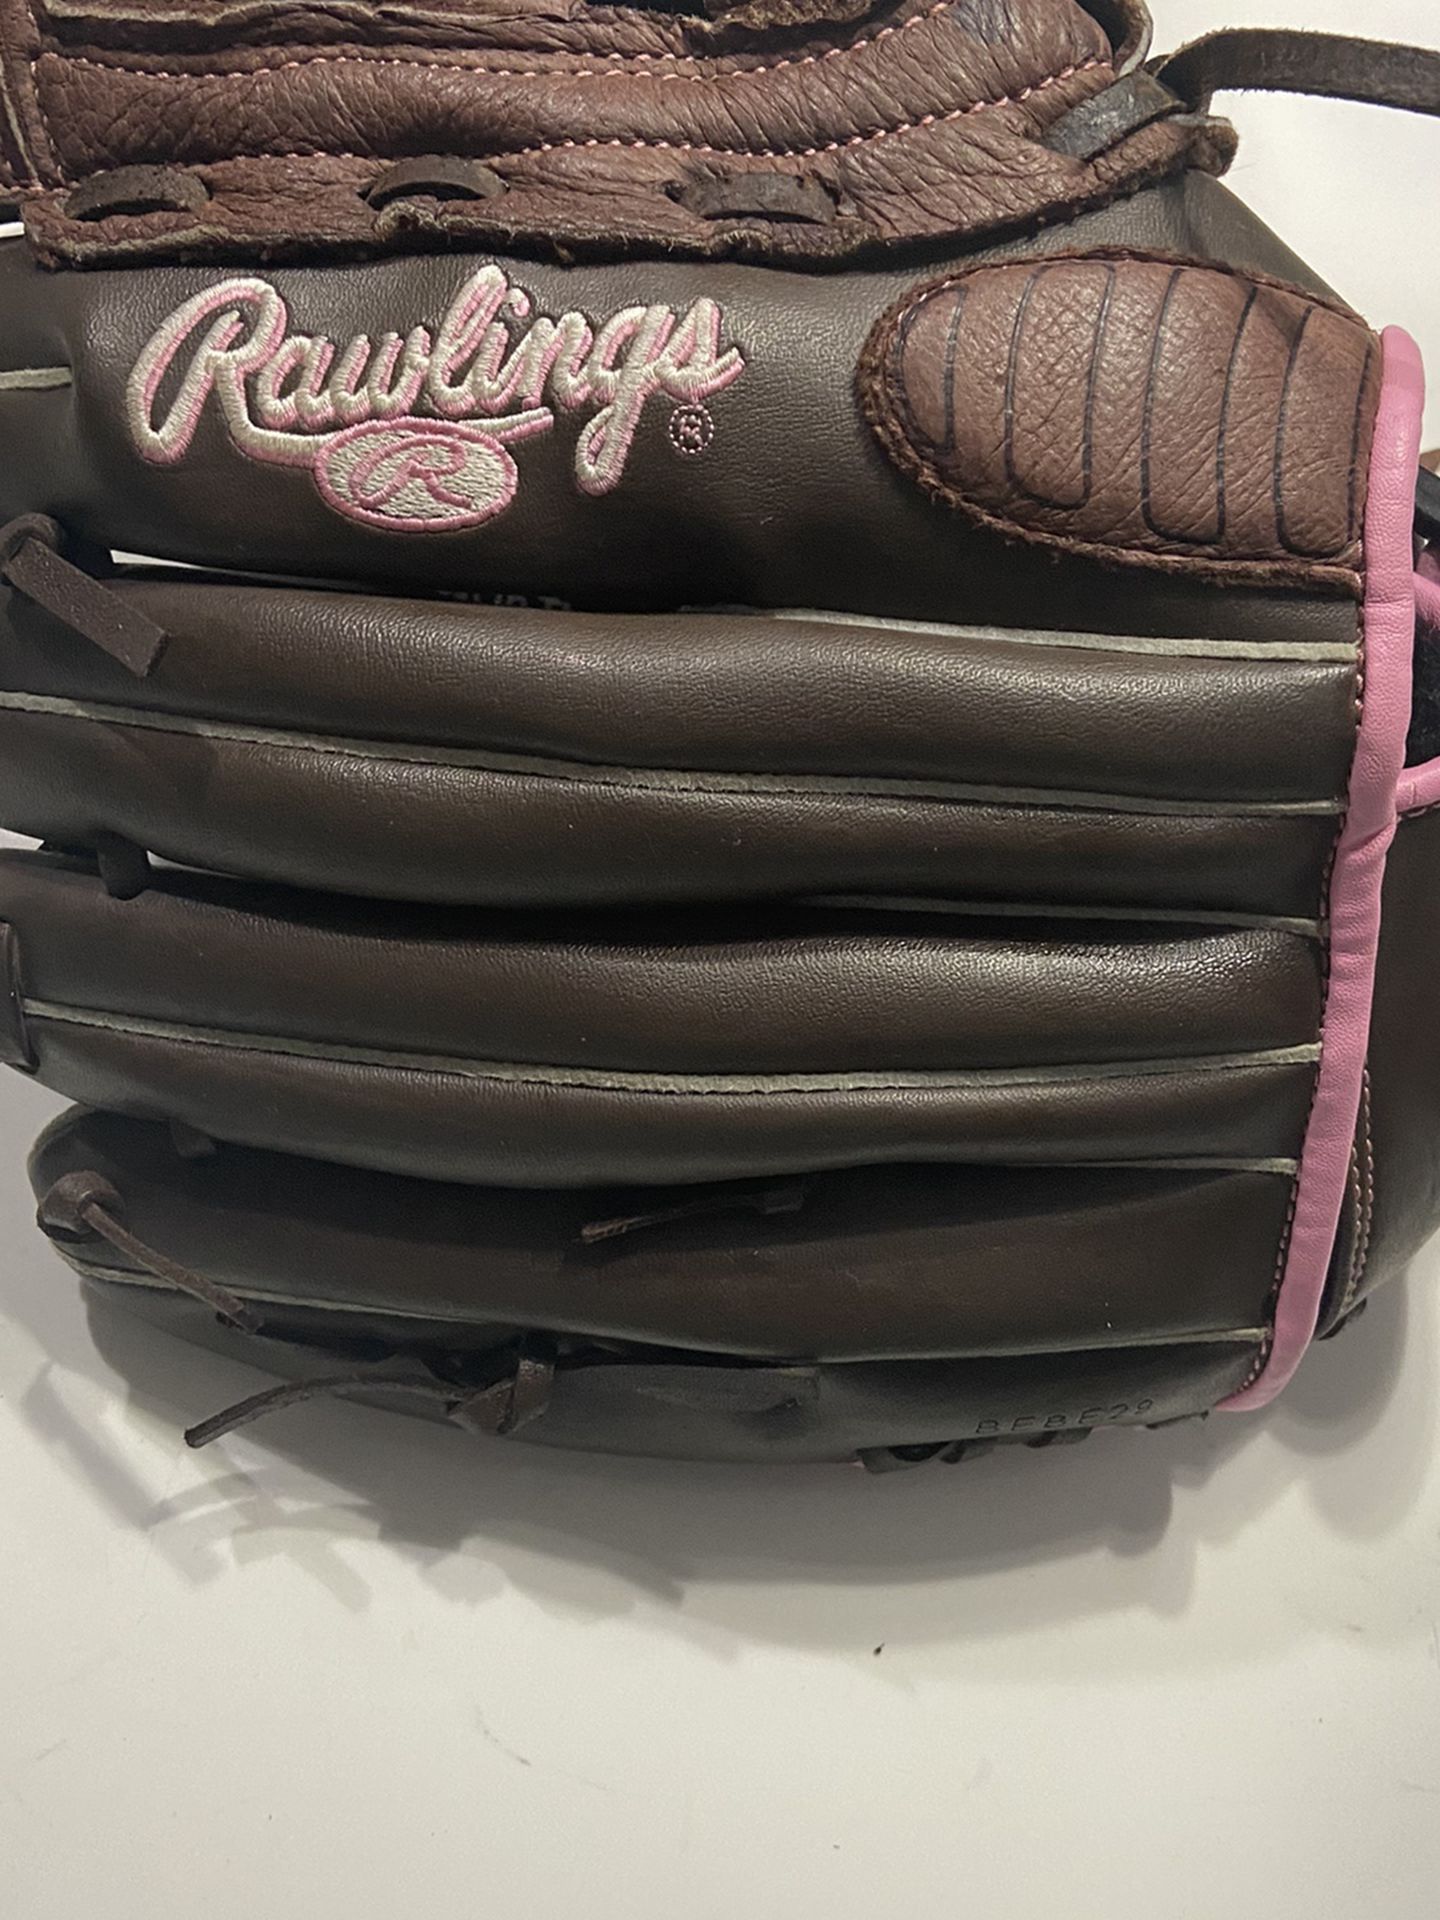 12" Rawlings WFP120 Women's Girls Fastpitch Softball Glove RHT Brown Pink Trim